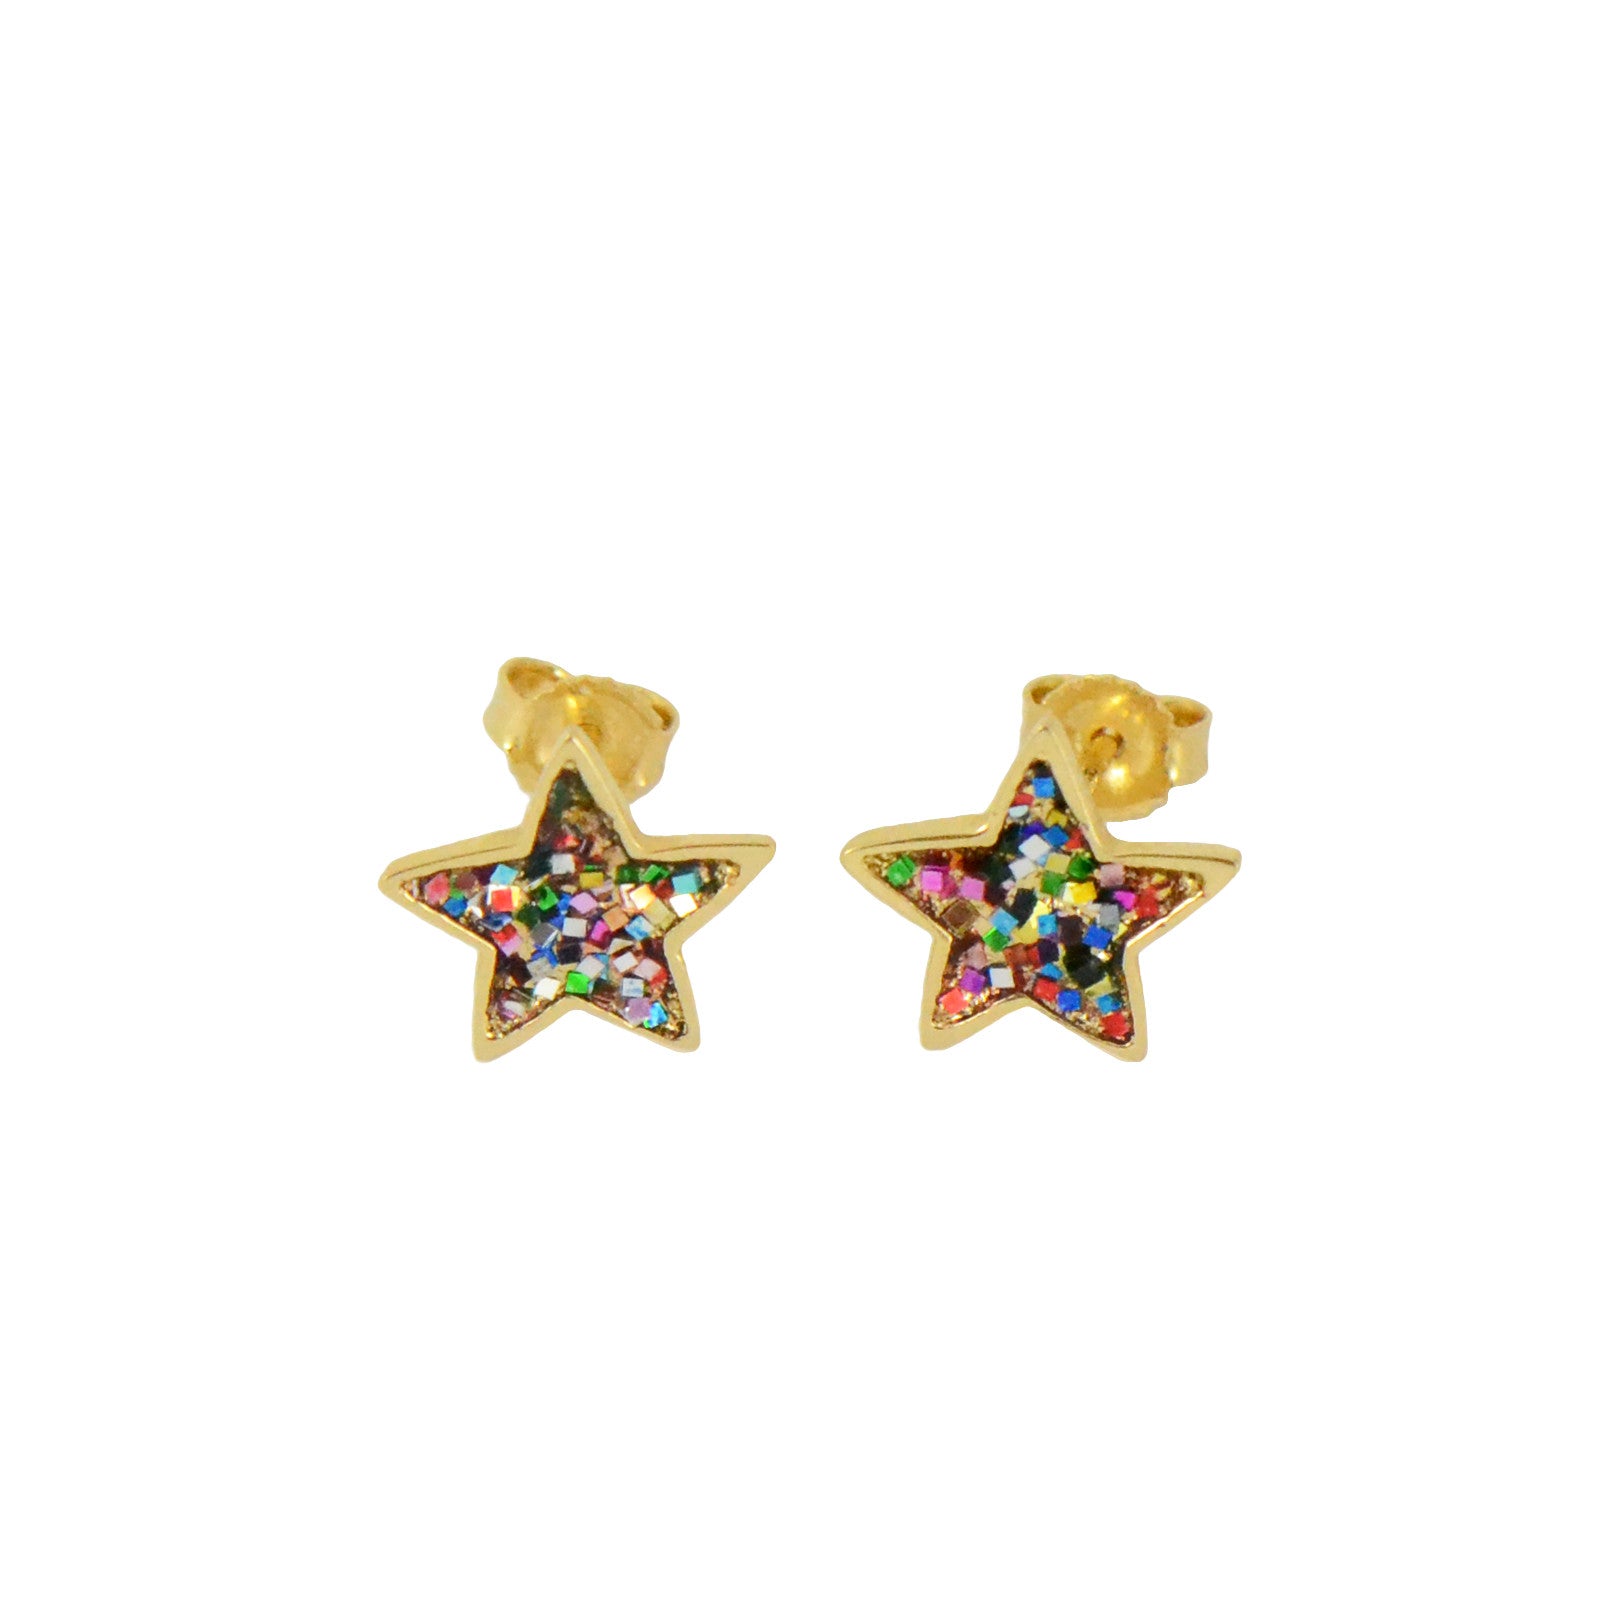 festive multiglitter star earring studs in gold vermeil